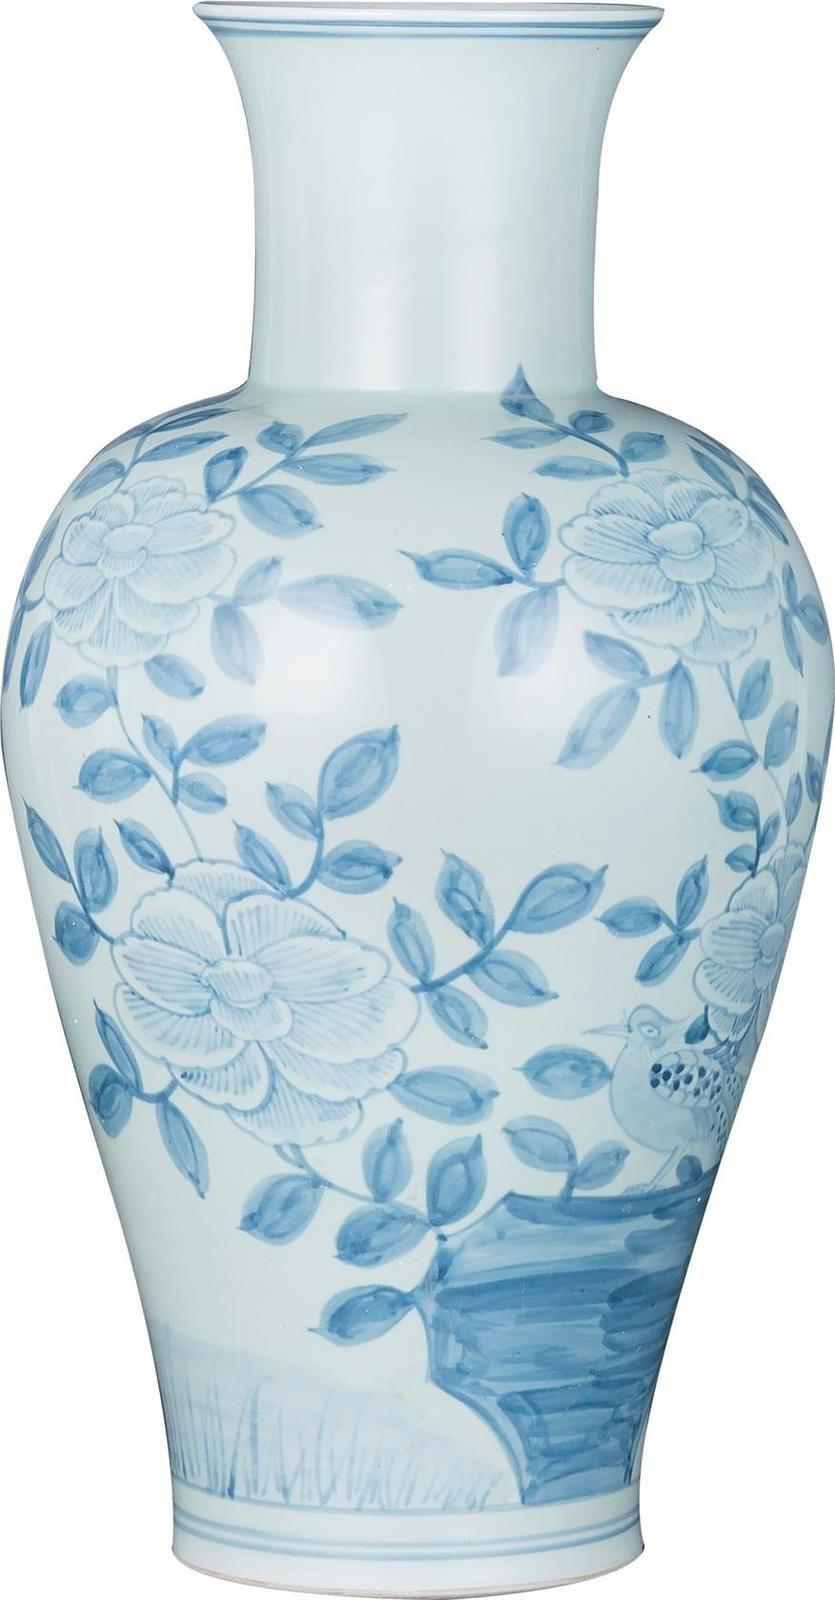 Vase Pheasant Flower Stool Blue White Ceramic Handmade Hand-Crafted-Image 1